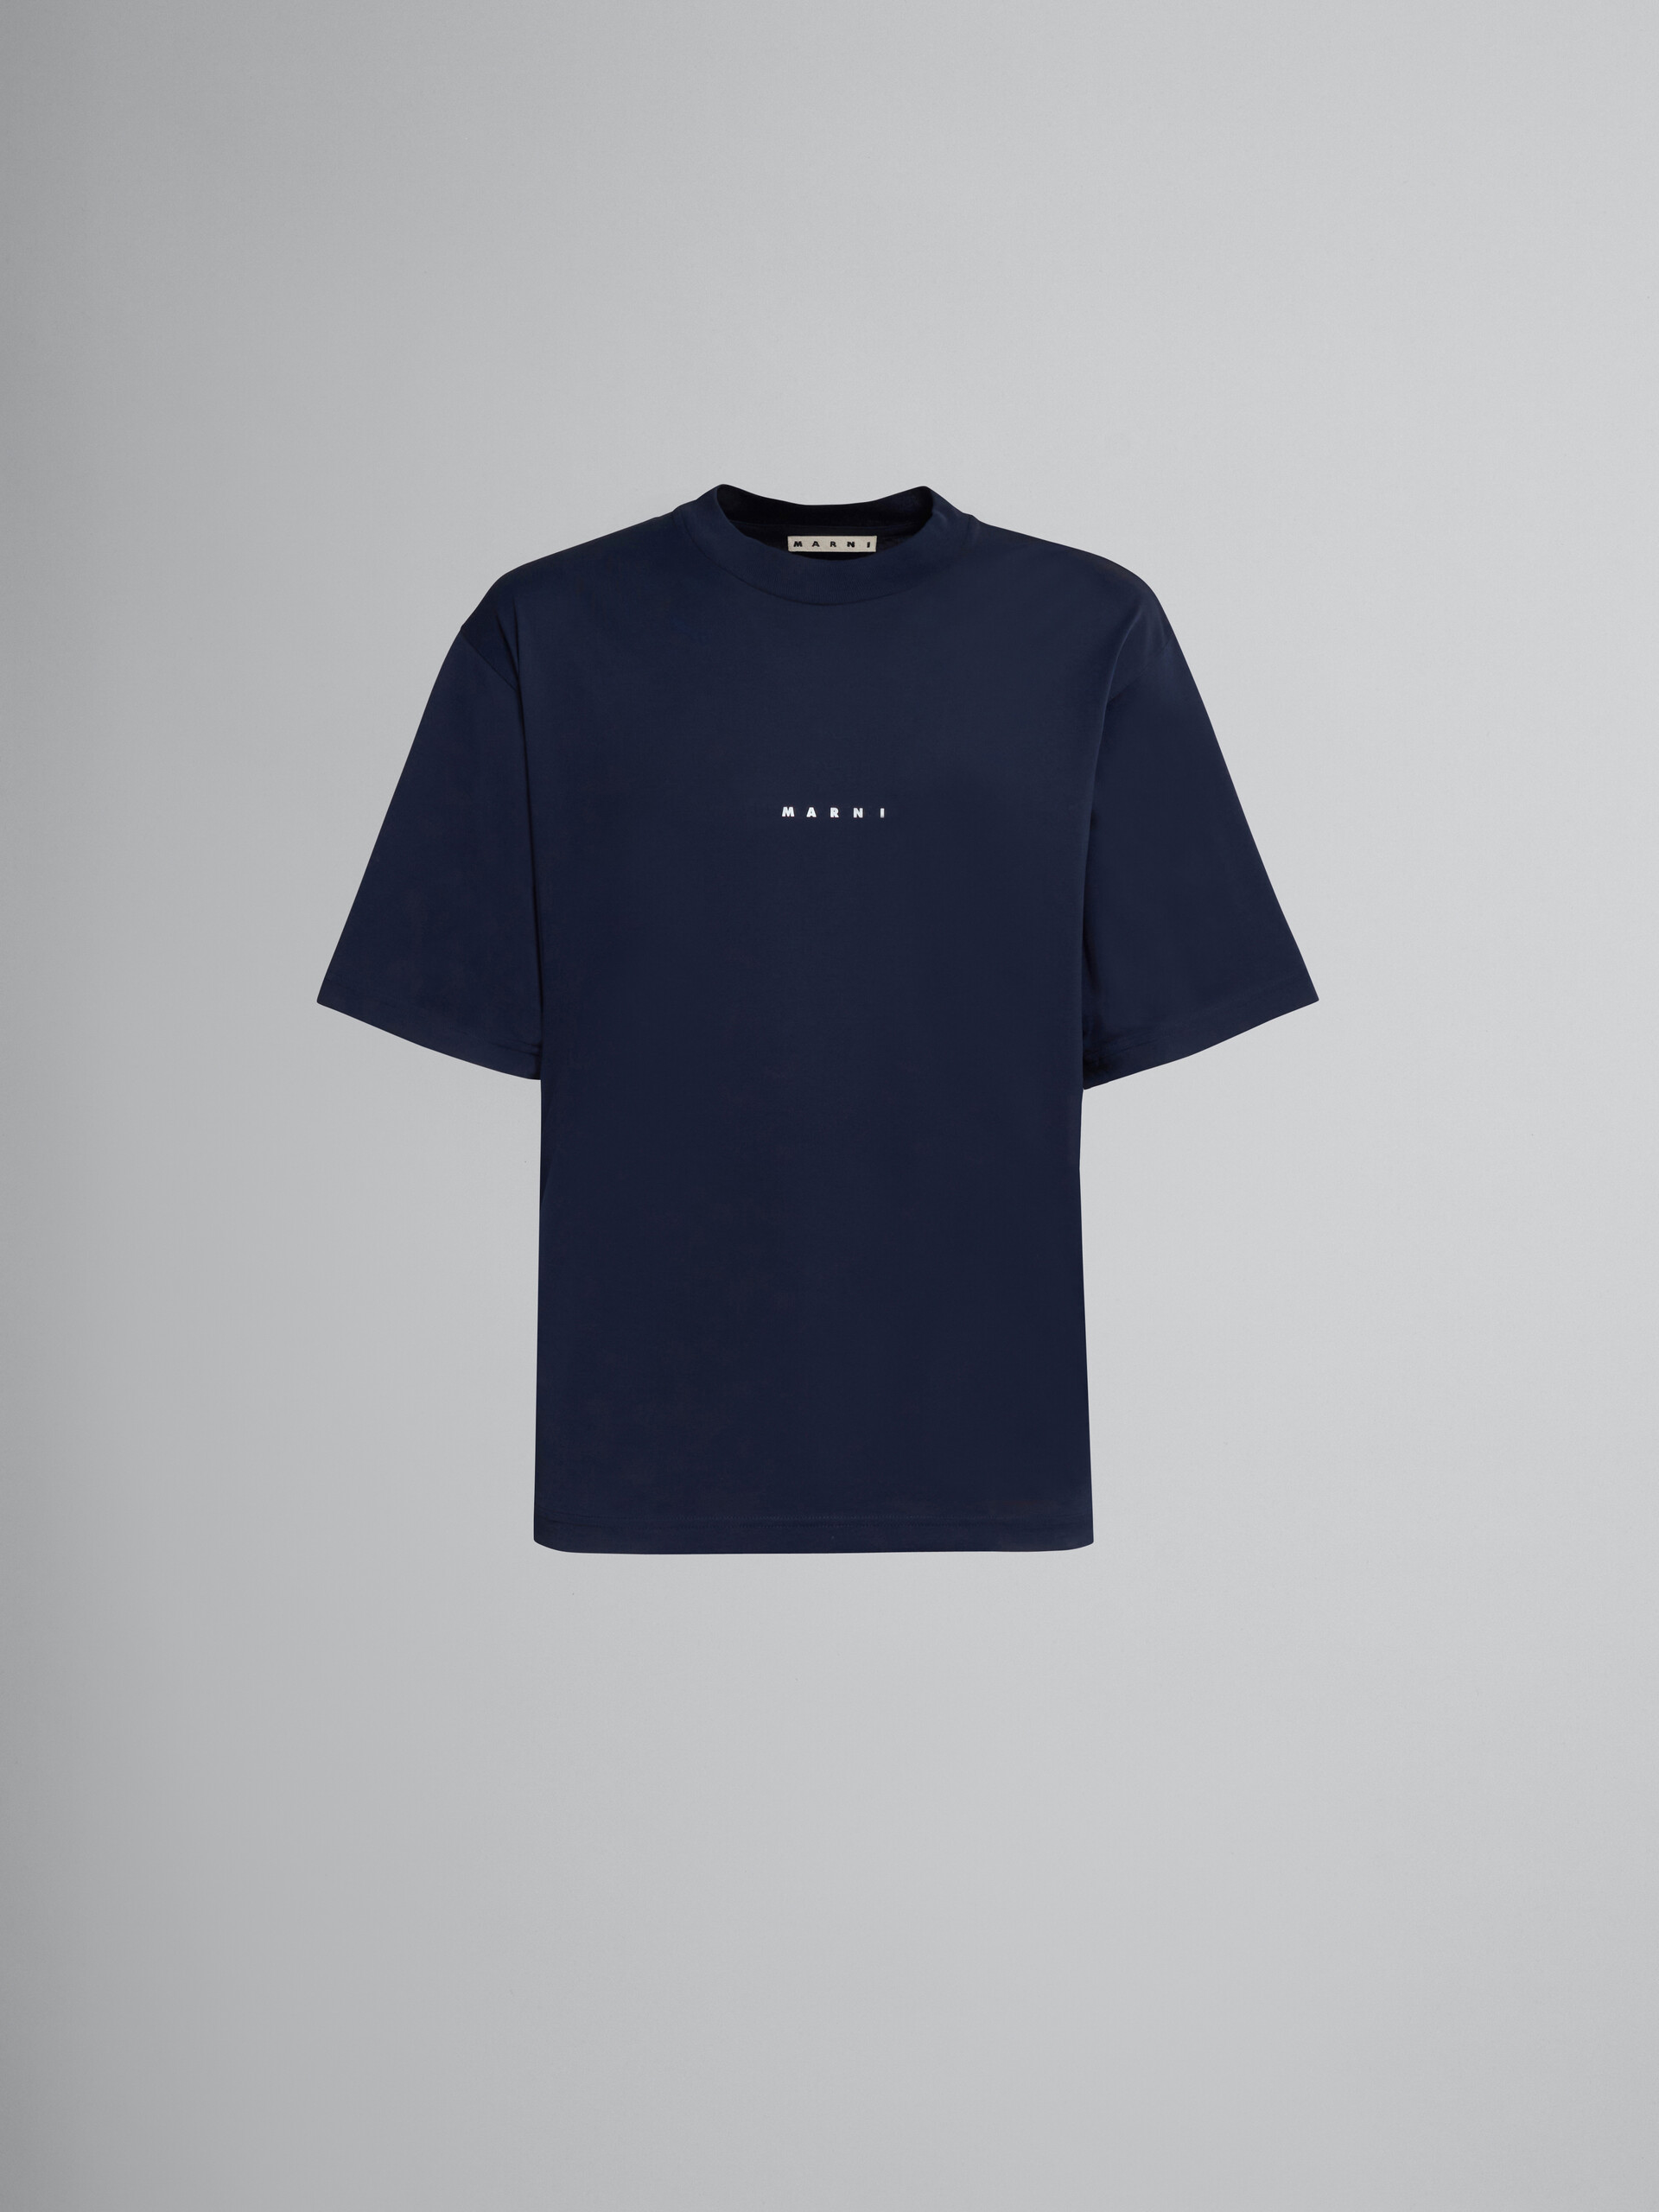 Blau-schwarzes Jersey-T-Shirt mit Logoprint - T-shirts - Image 1